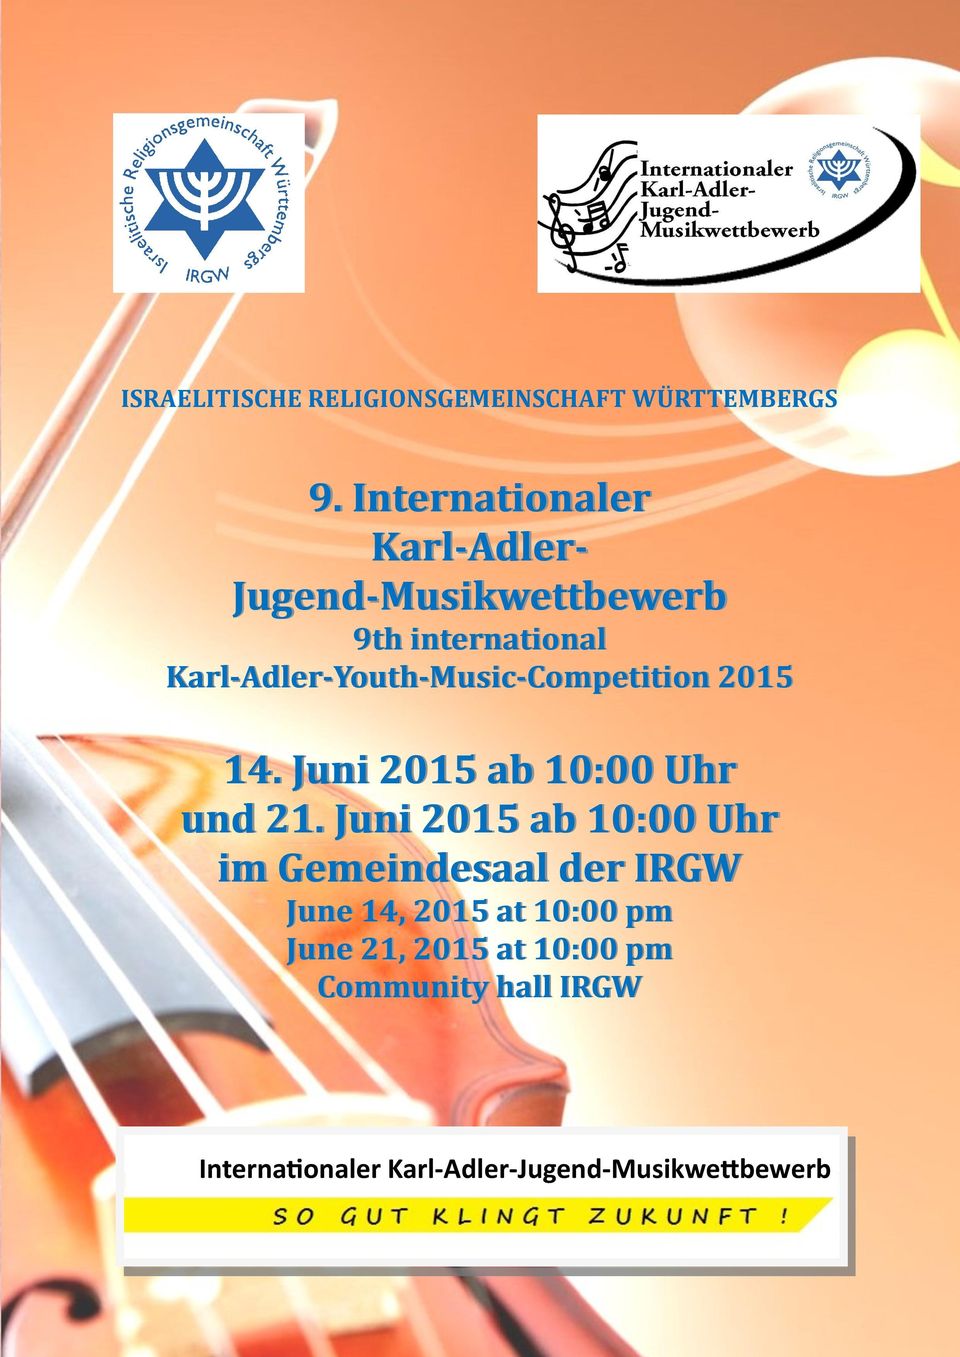 Adler-Youth-Music-Competition 2015 Karl-Adler 14. Juni 2015 ab 10:00 Uhr und 21.